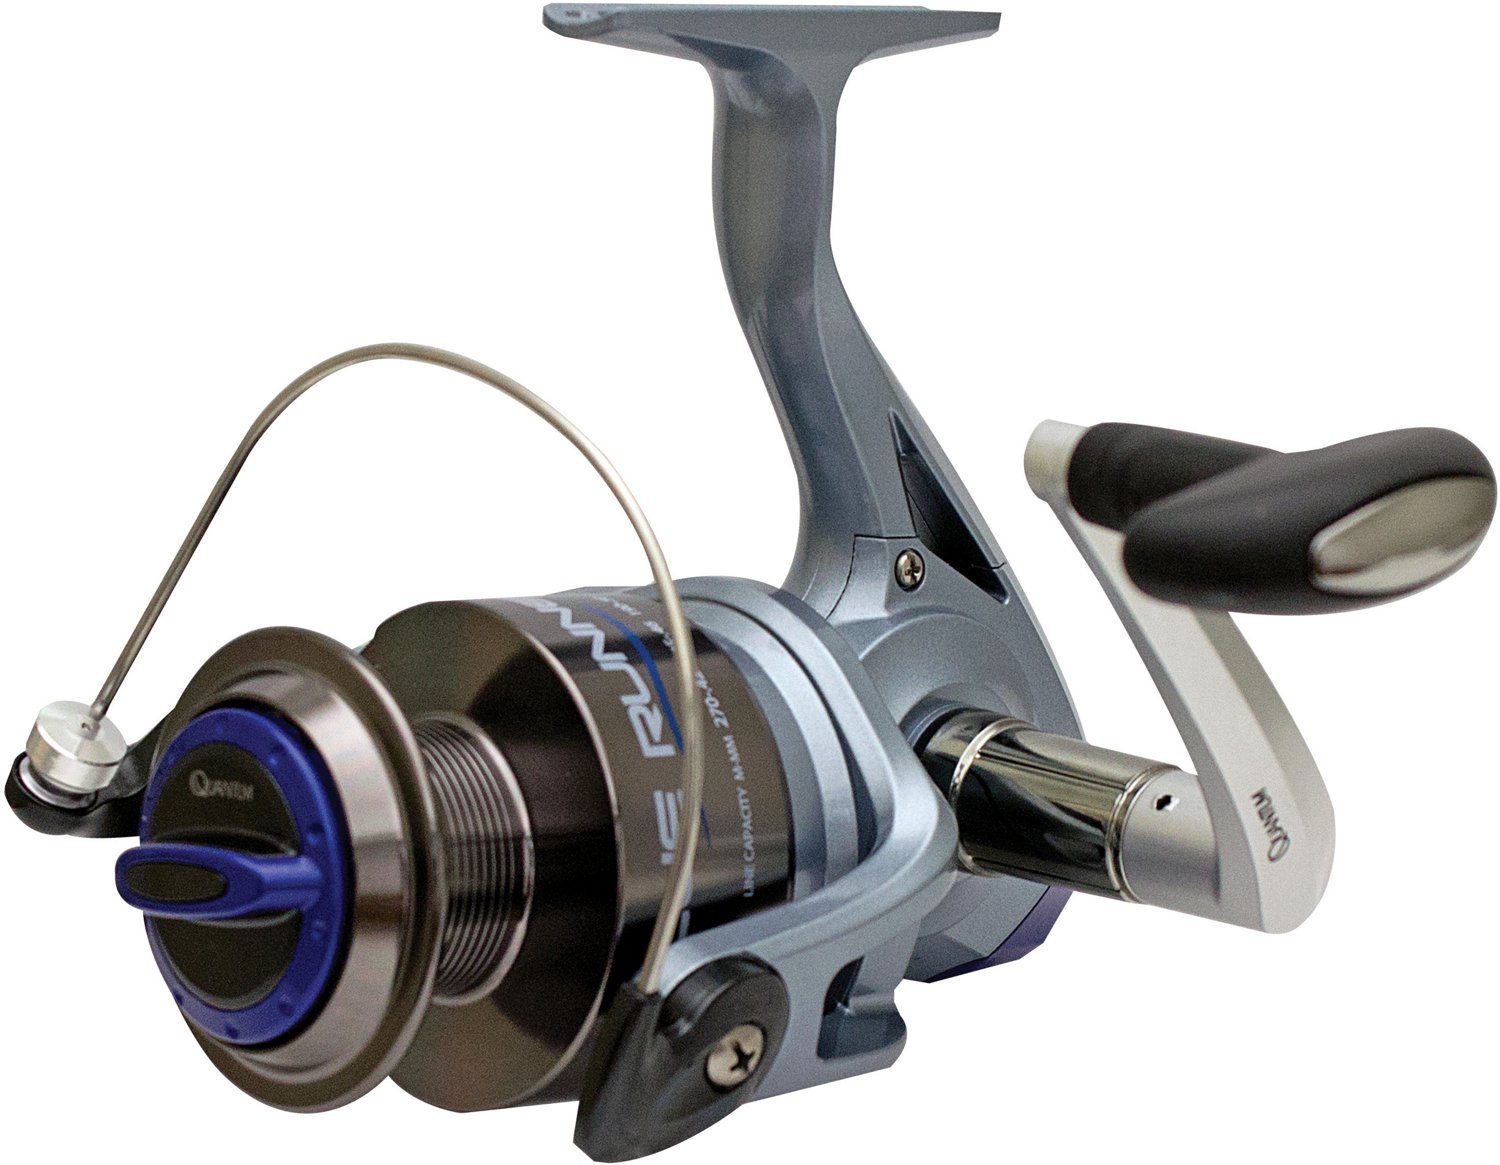 Buy CLORIS Fishing Rod and Reel Combo Saltwater Freshwater-12 FT